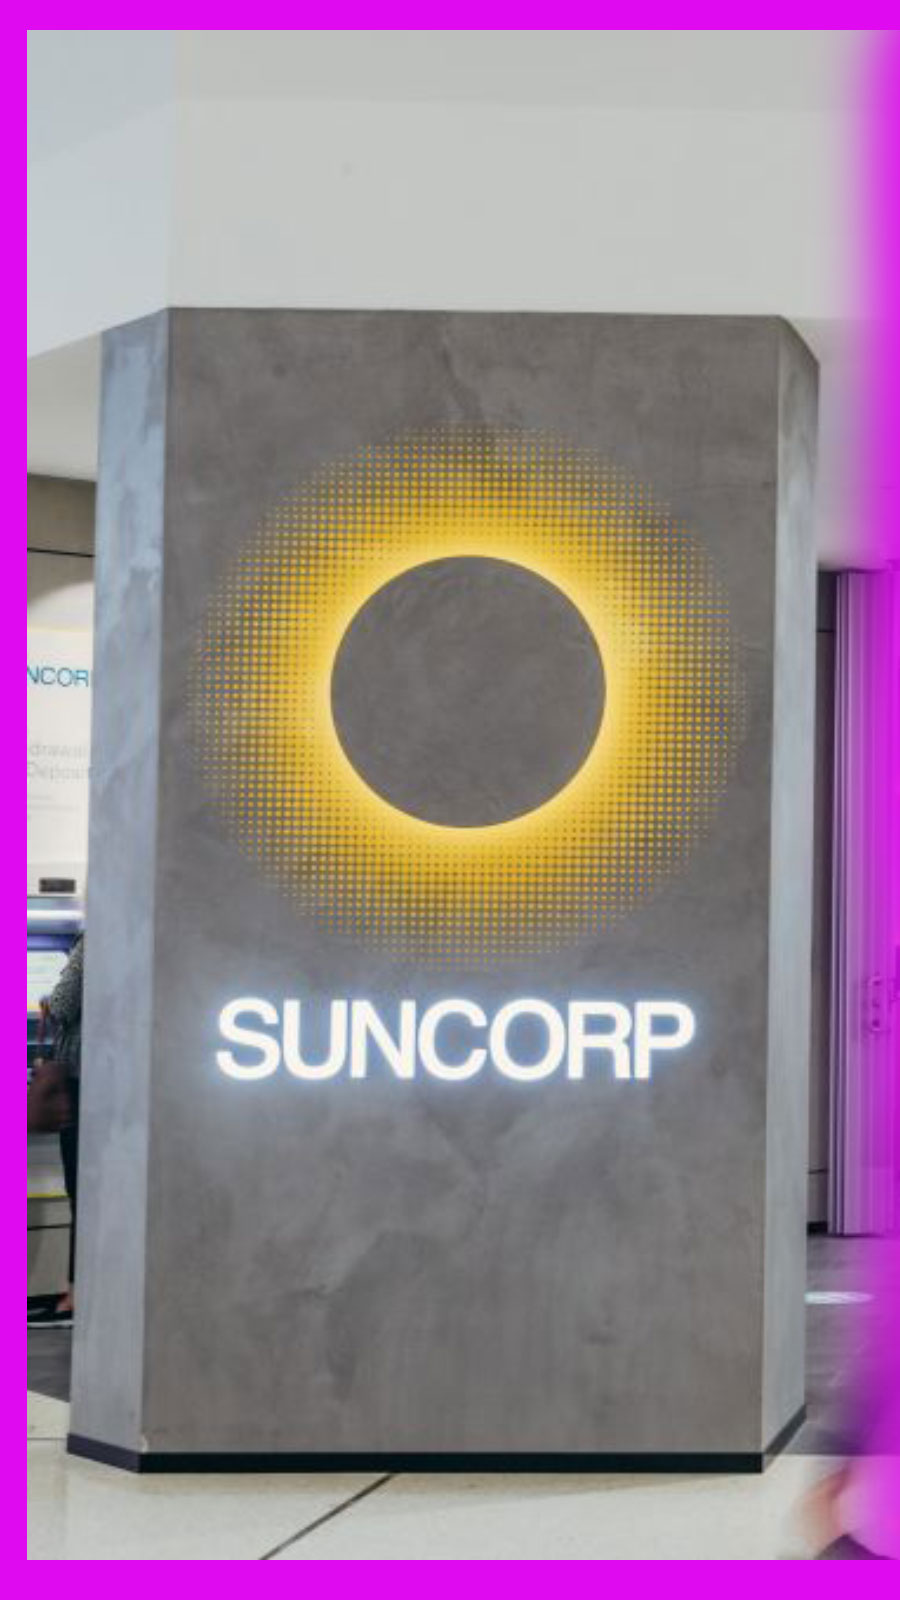 Suncorp social media social playbook